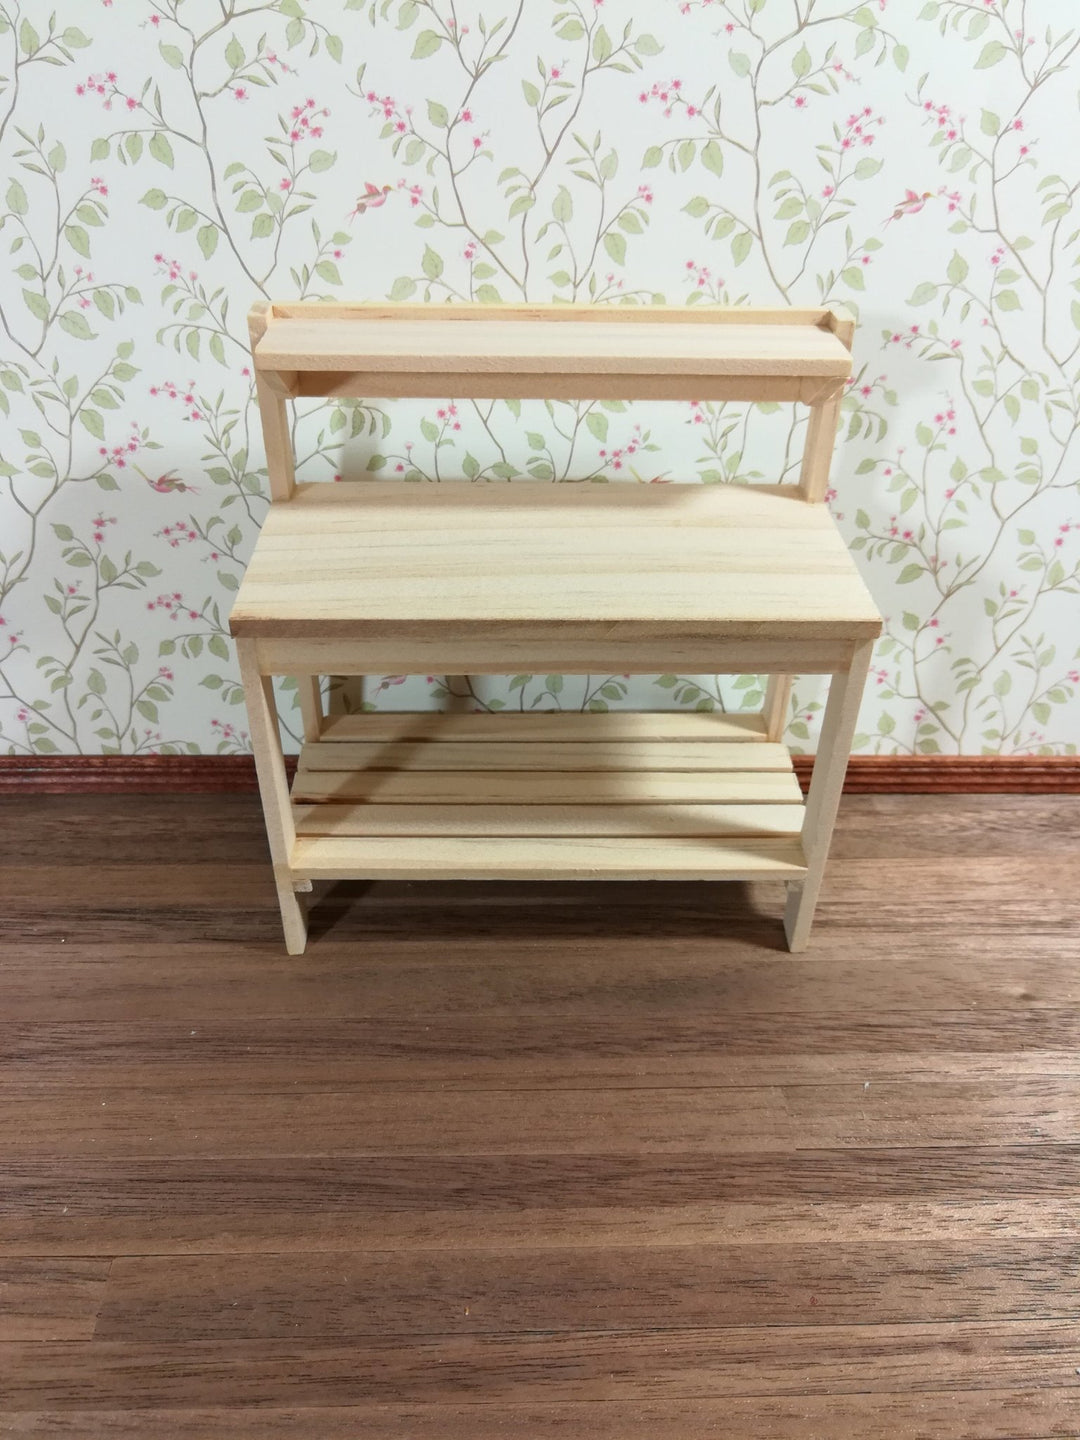 Dollhouse Gardening Workbench Table Unpainted Wood 1:12 Scale Miniature Furniture - Miniature Crush